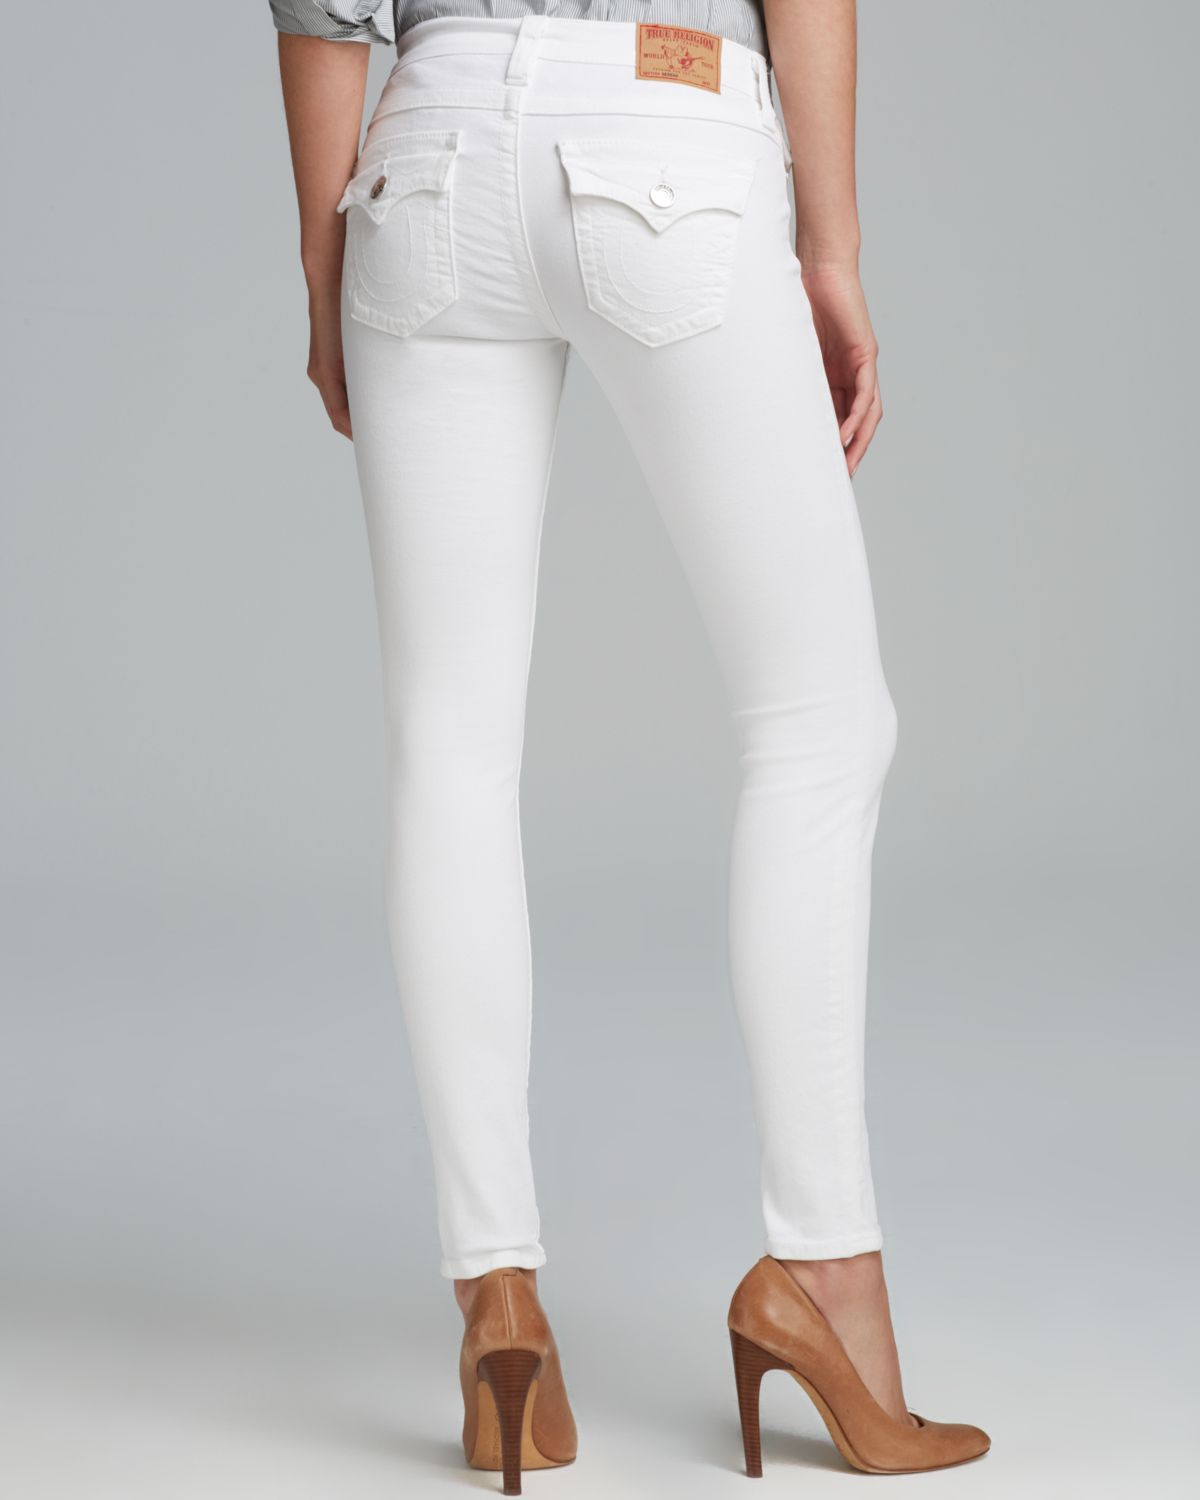 white true religion jeans womens online -